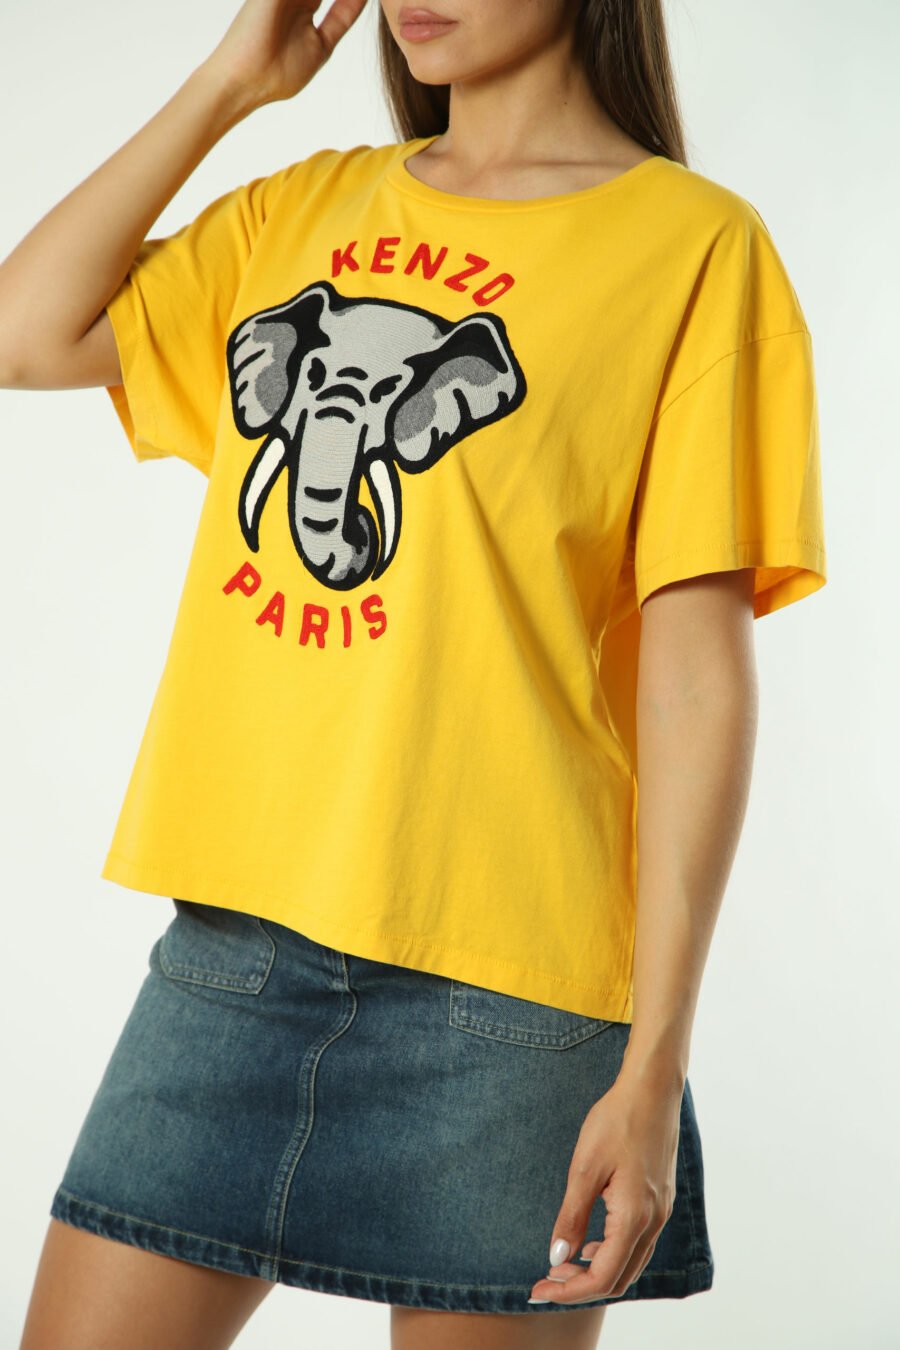 Gelbes T-Shirt mit Elefanten-Maxilogo - Fotos 1310